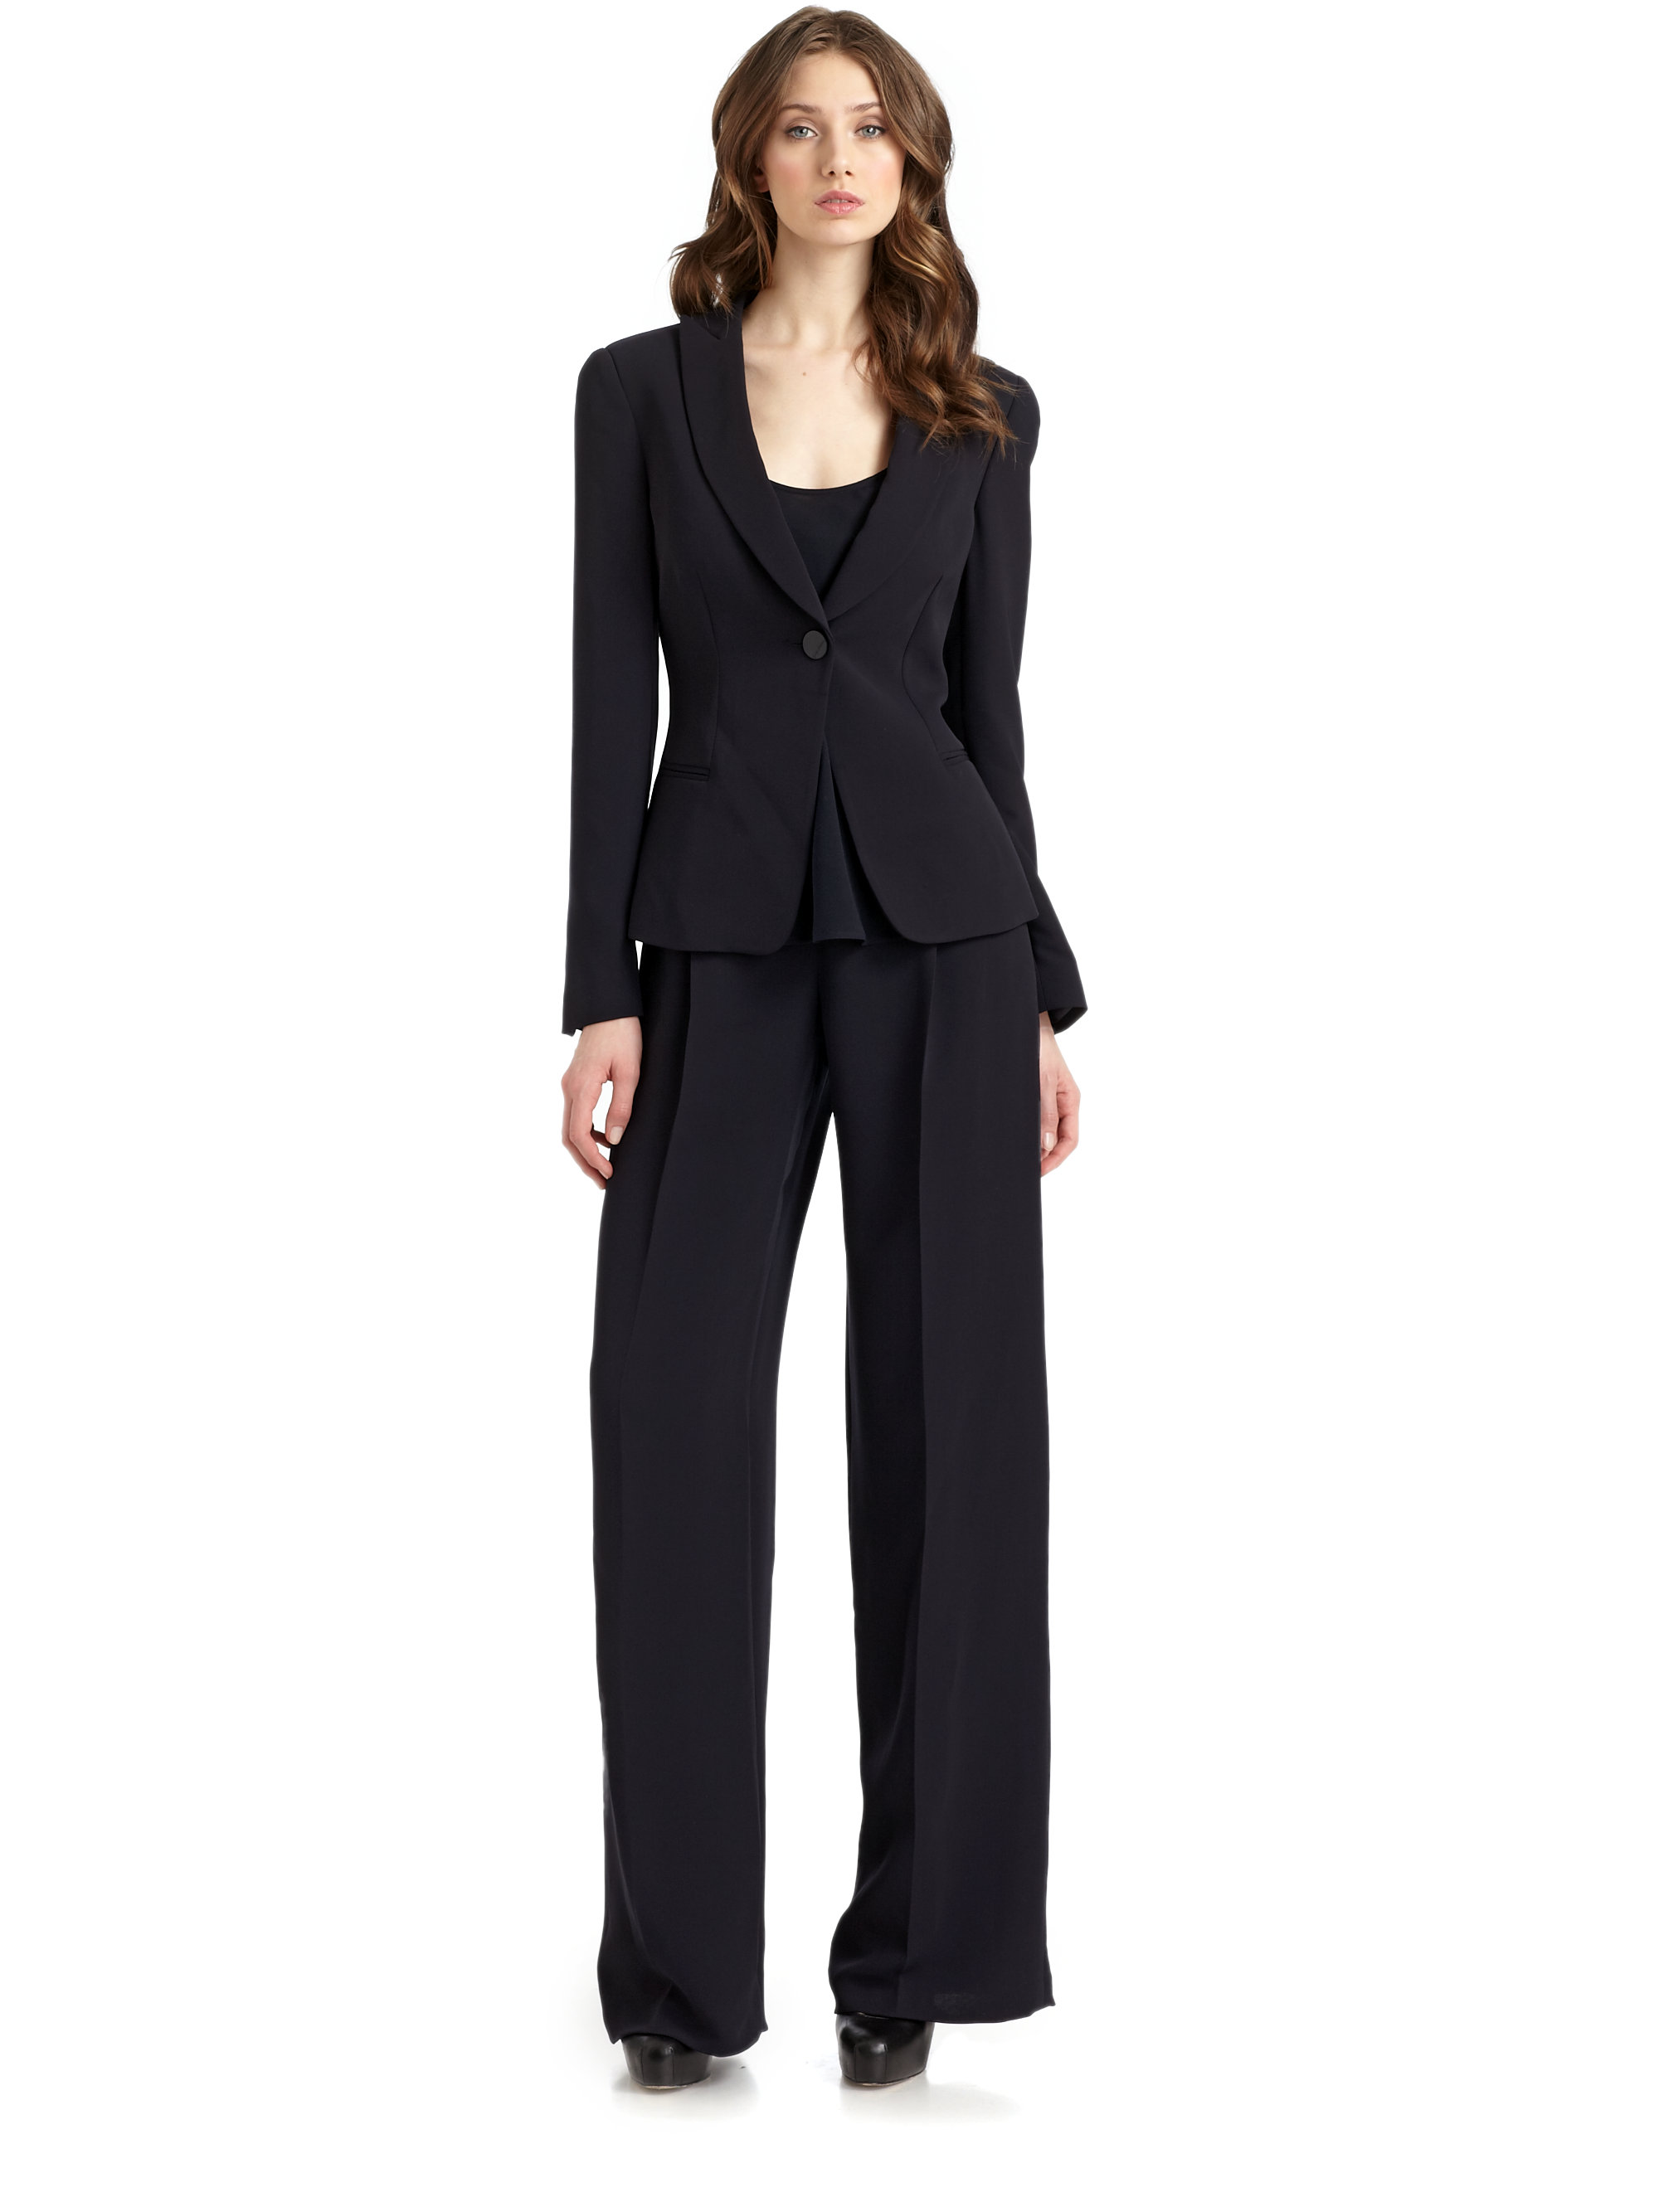 Custom Made Black Women Suit Pinstripe Suit Brand Lady